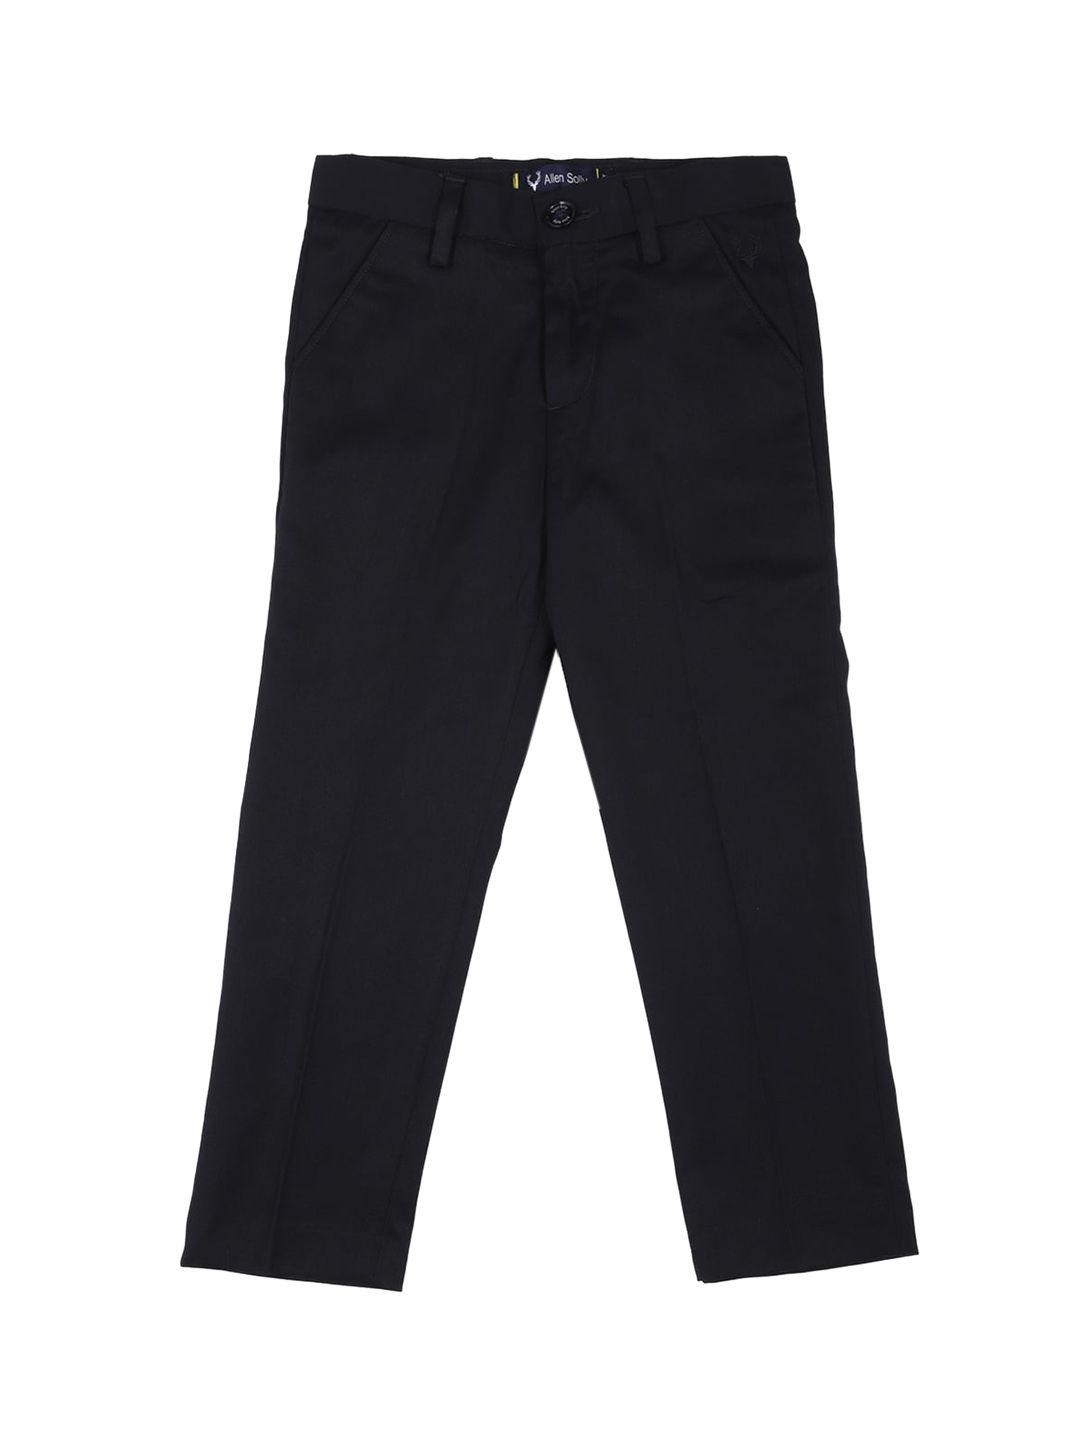 allen solly junior boys mid-rise cotton slim fit trousers